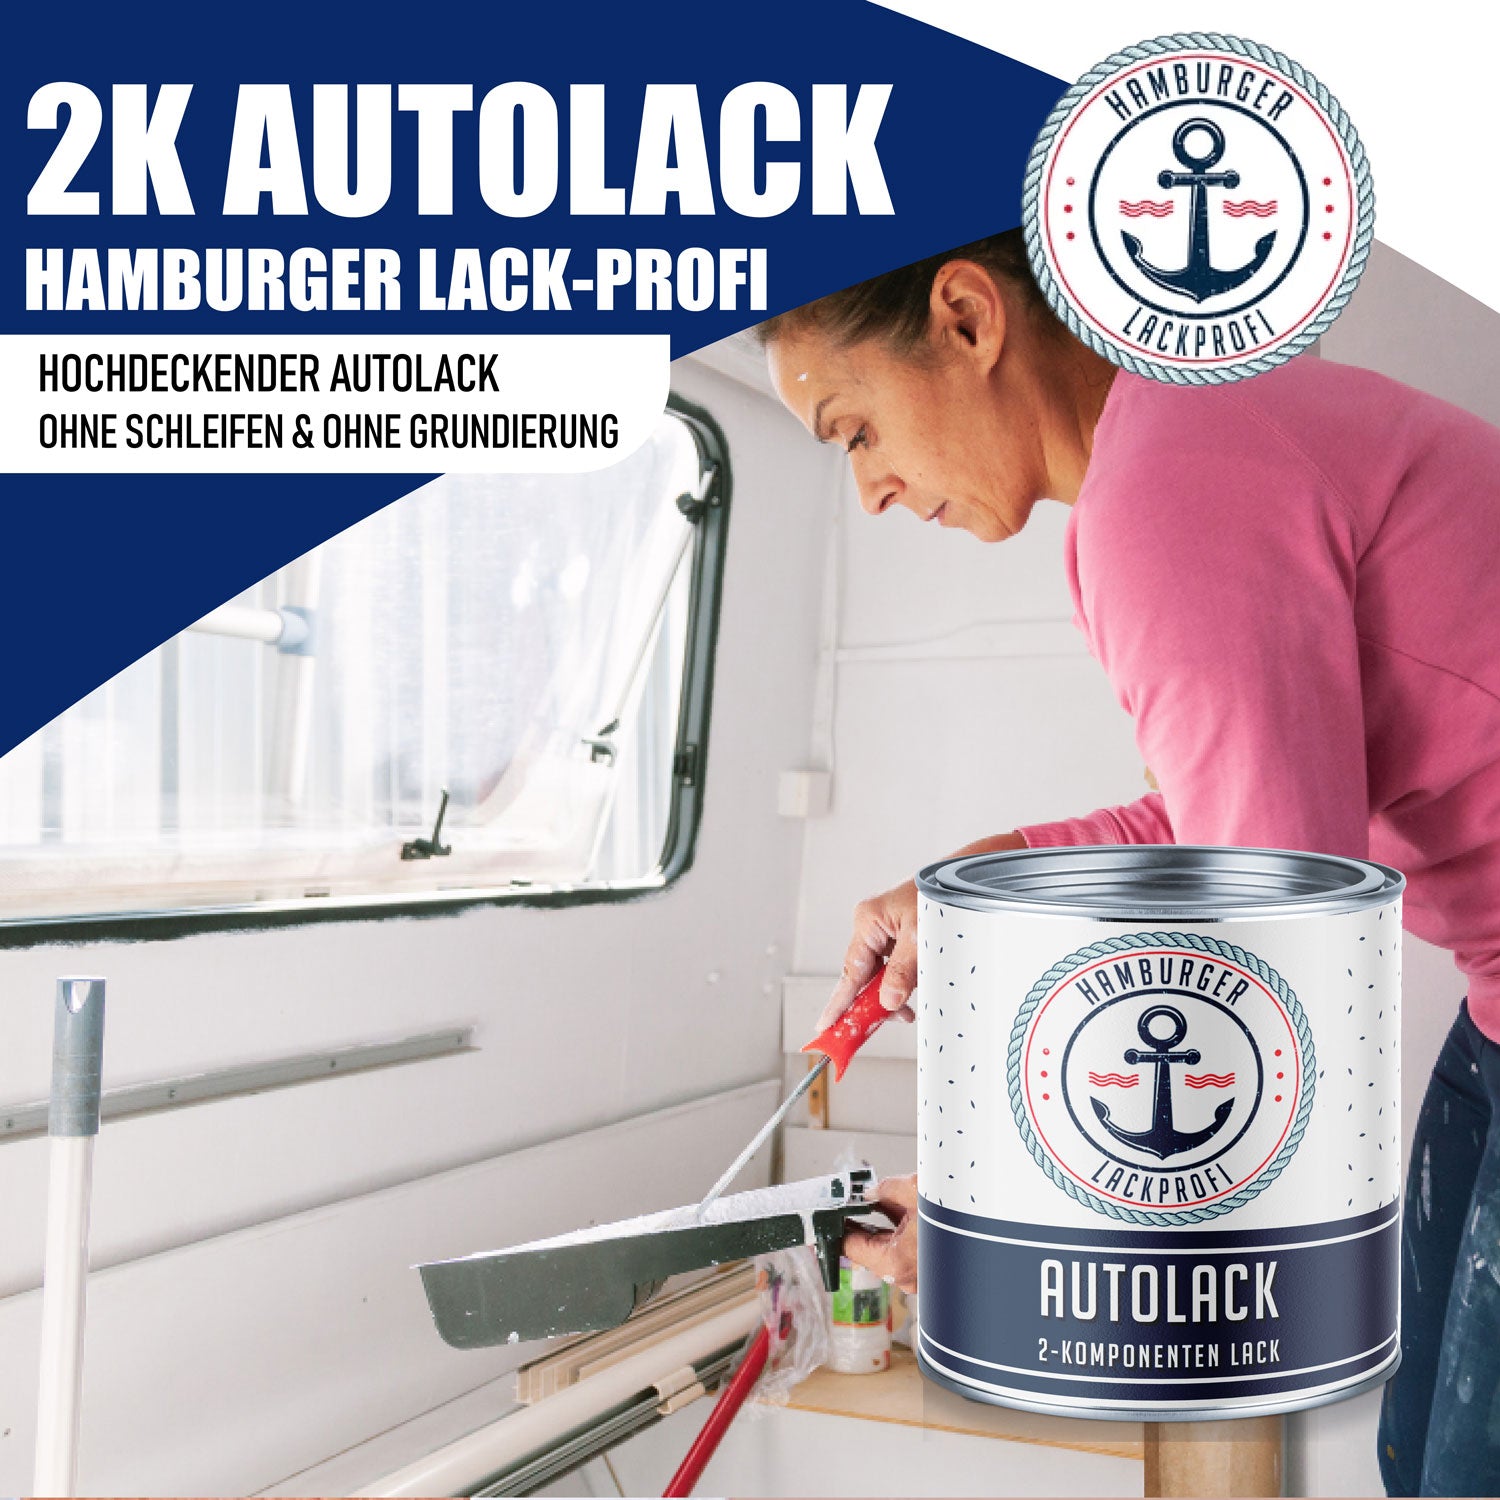 Hamburger Lack-Profi 2K Autolack in Graphitgrau RAL 7024 mit Lackierset (X300) & Verdünnung (1 L) - 30% Sparangebot